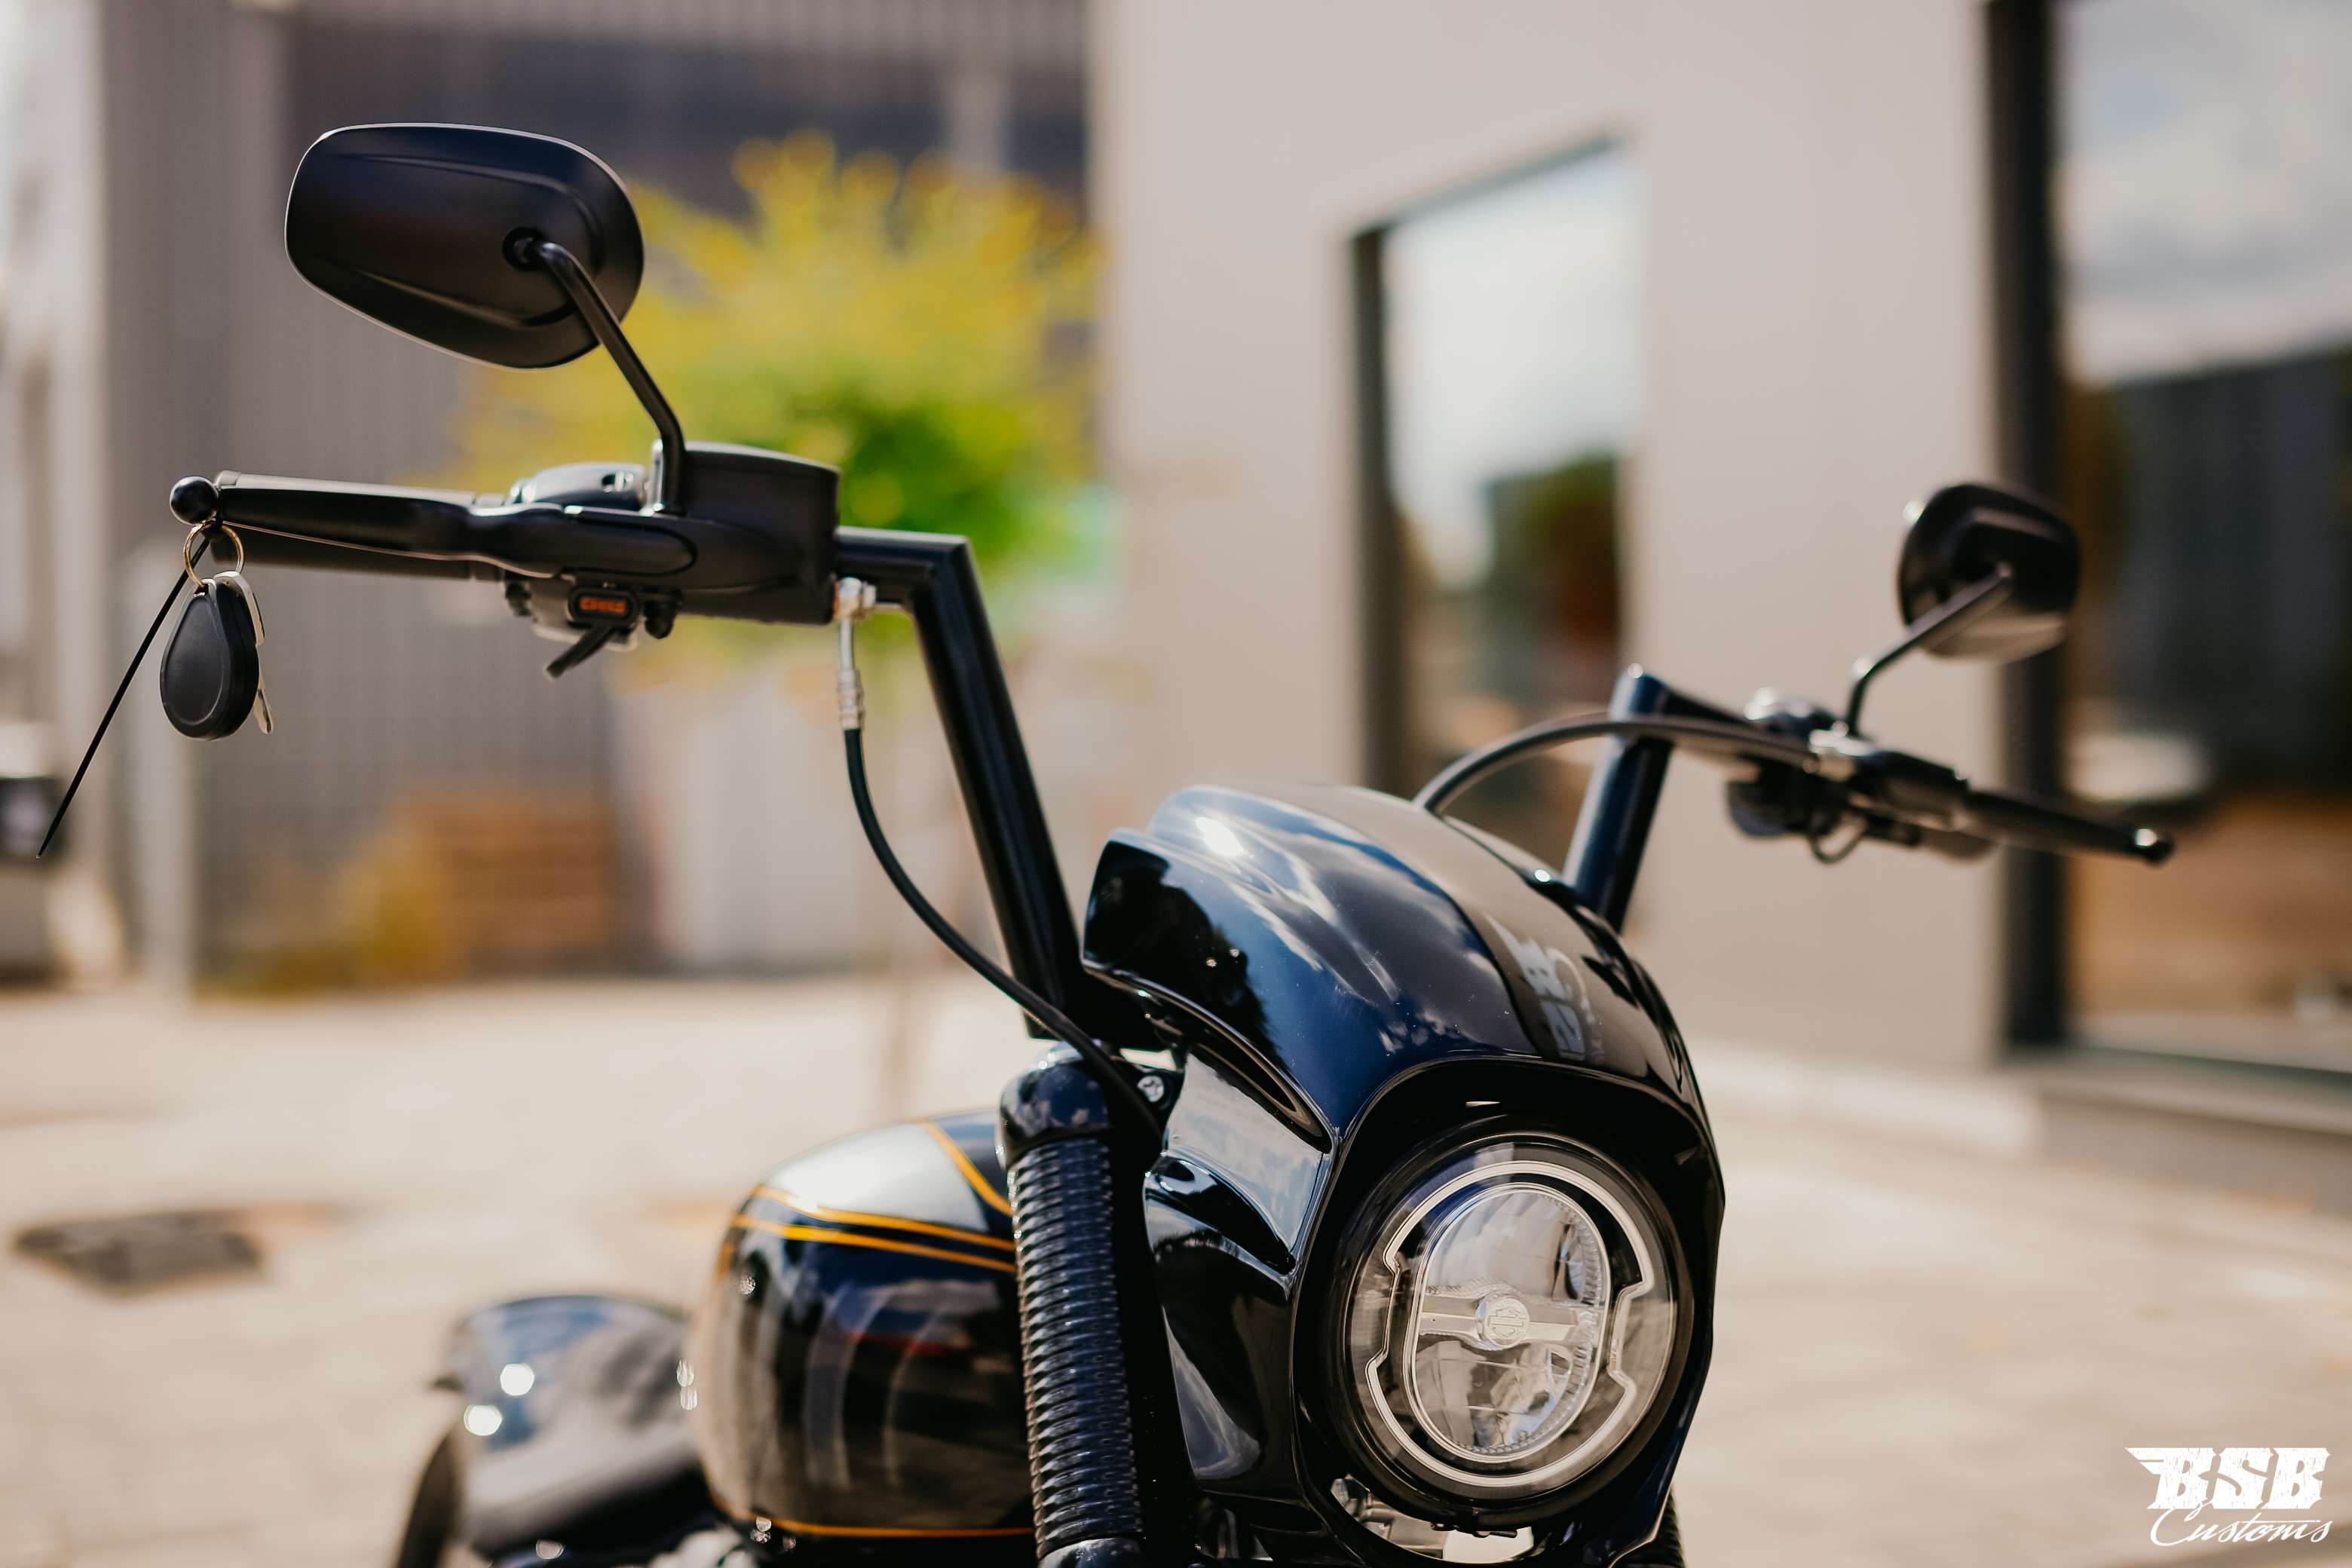 2020 Harley Davidson FXBB Street Bob 200er Umbau  + 12 Monate Garantie über INTEC